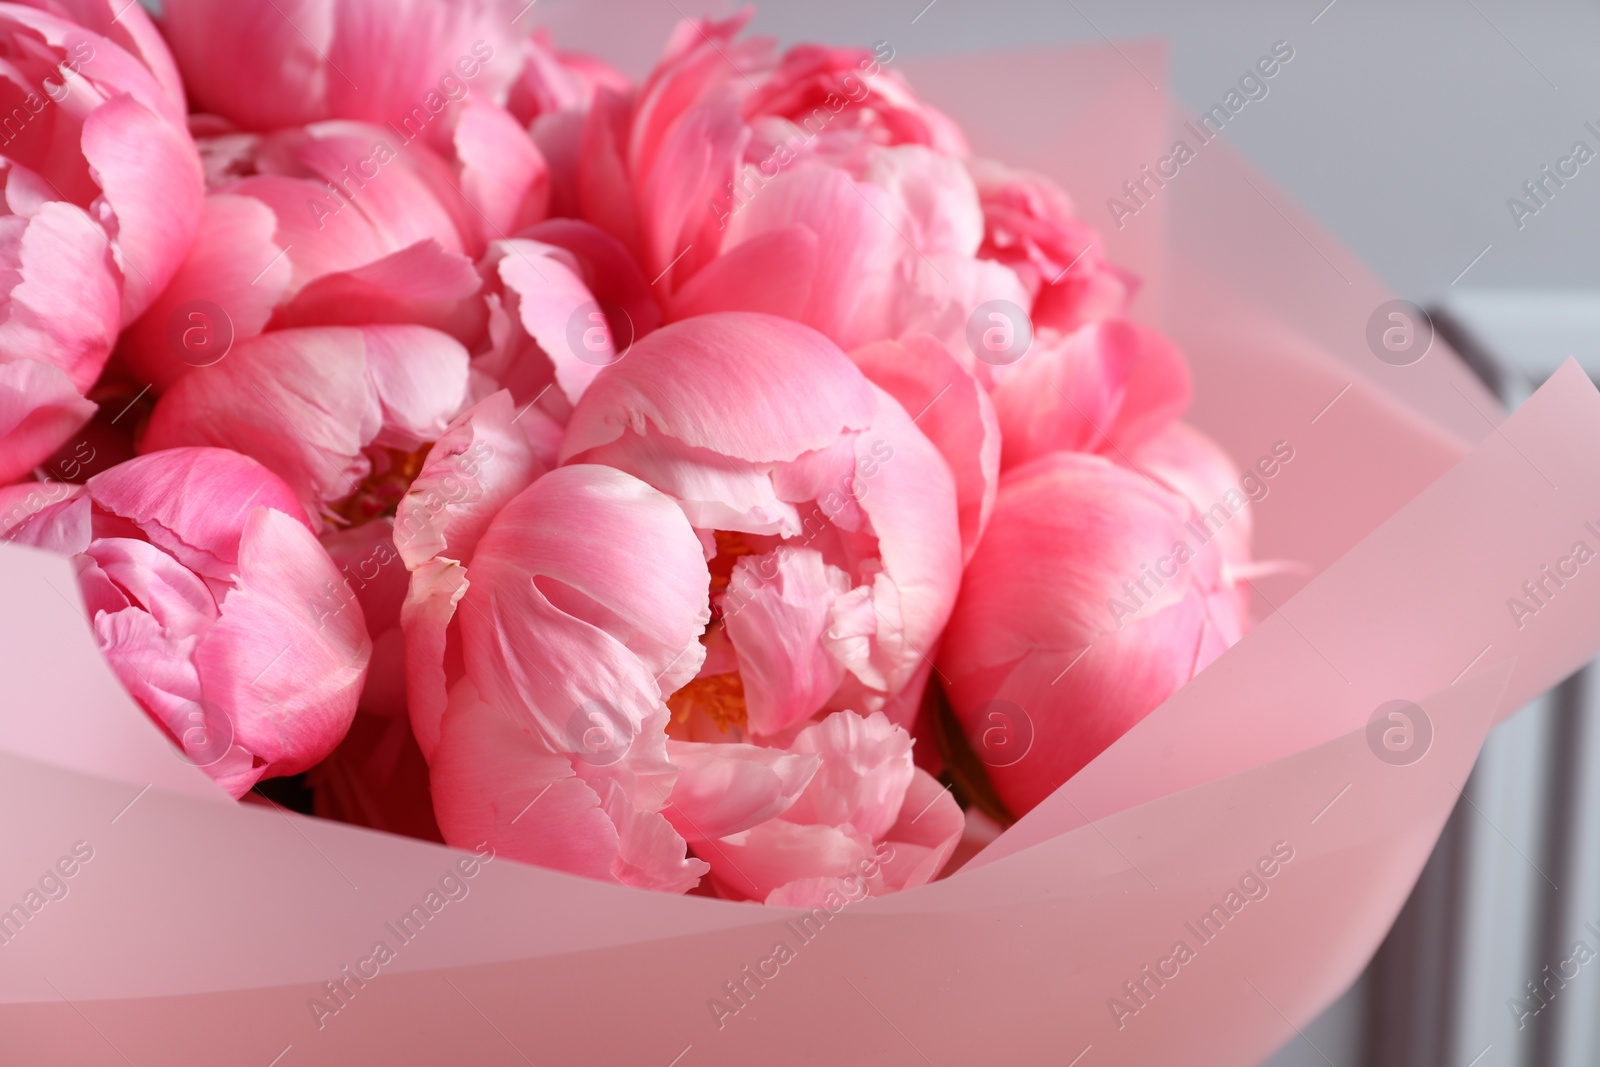 Photo of Bouquet of beautiful pink peonies, closeup view